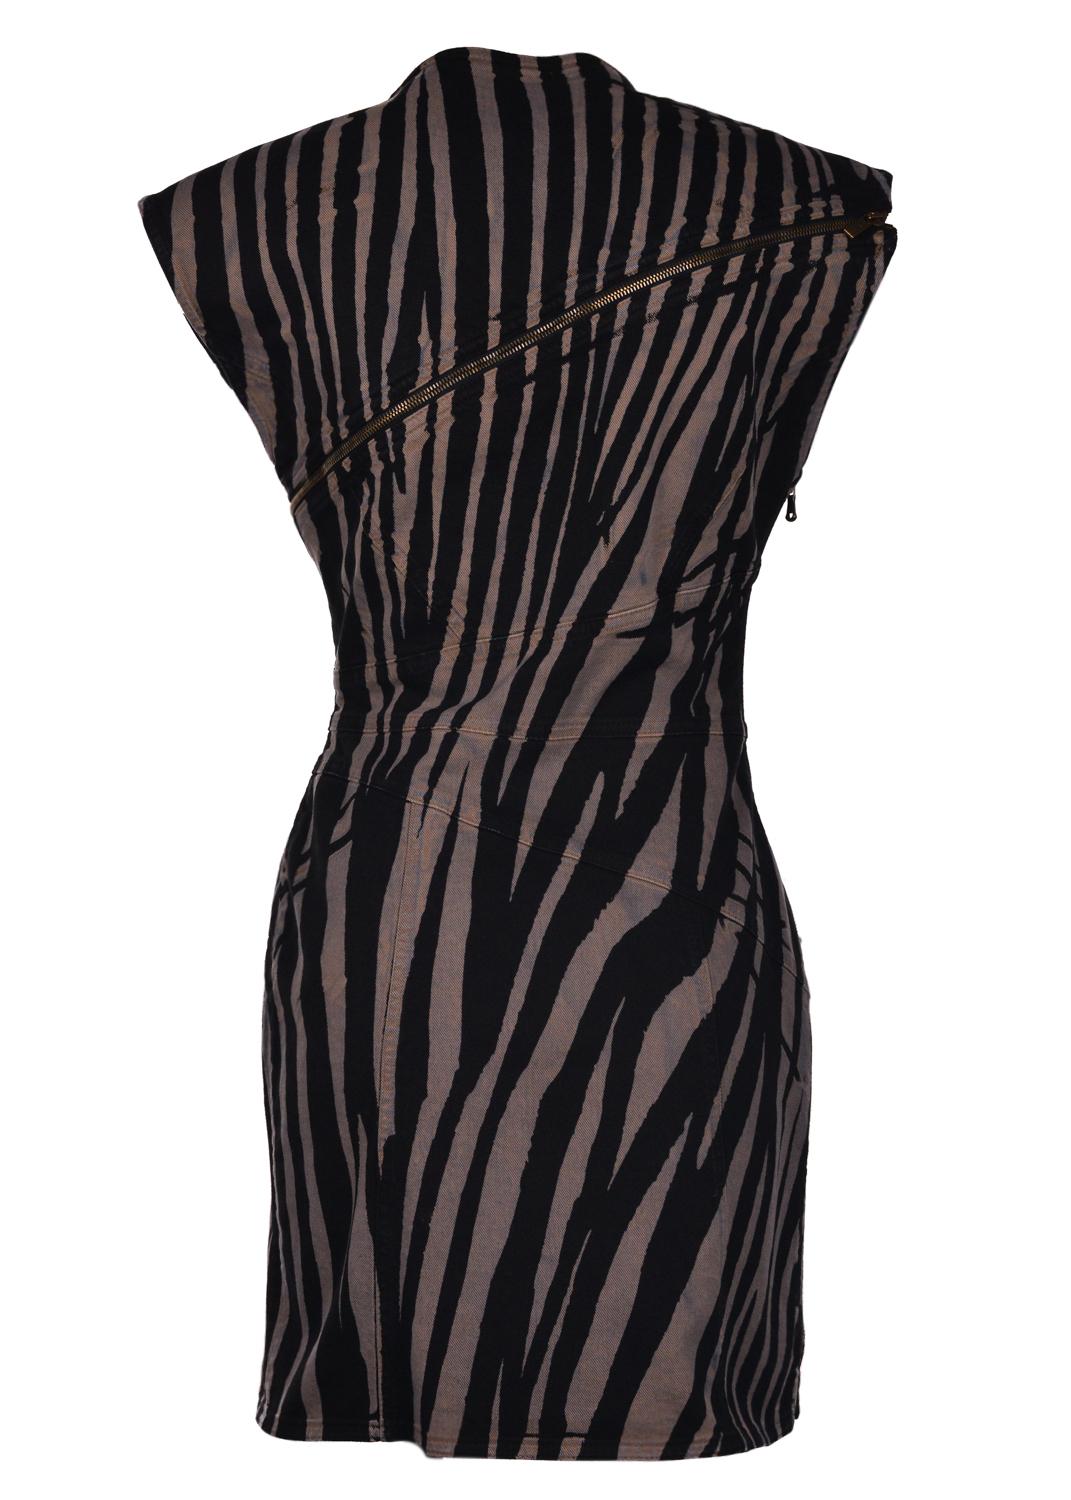 Roberto Cavalli Black Zebra Printed Denim Zipper Dress In New Condition For Sale In Brooklyn, NY